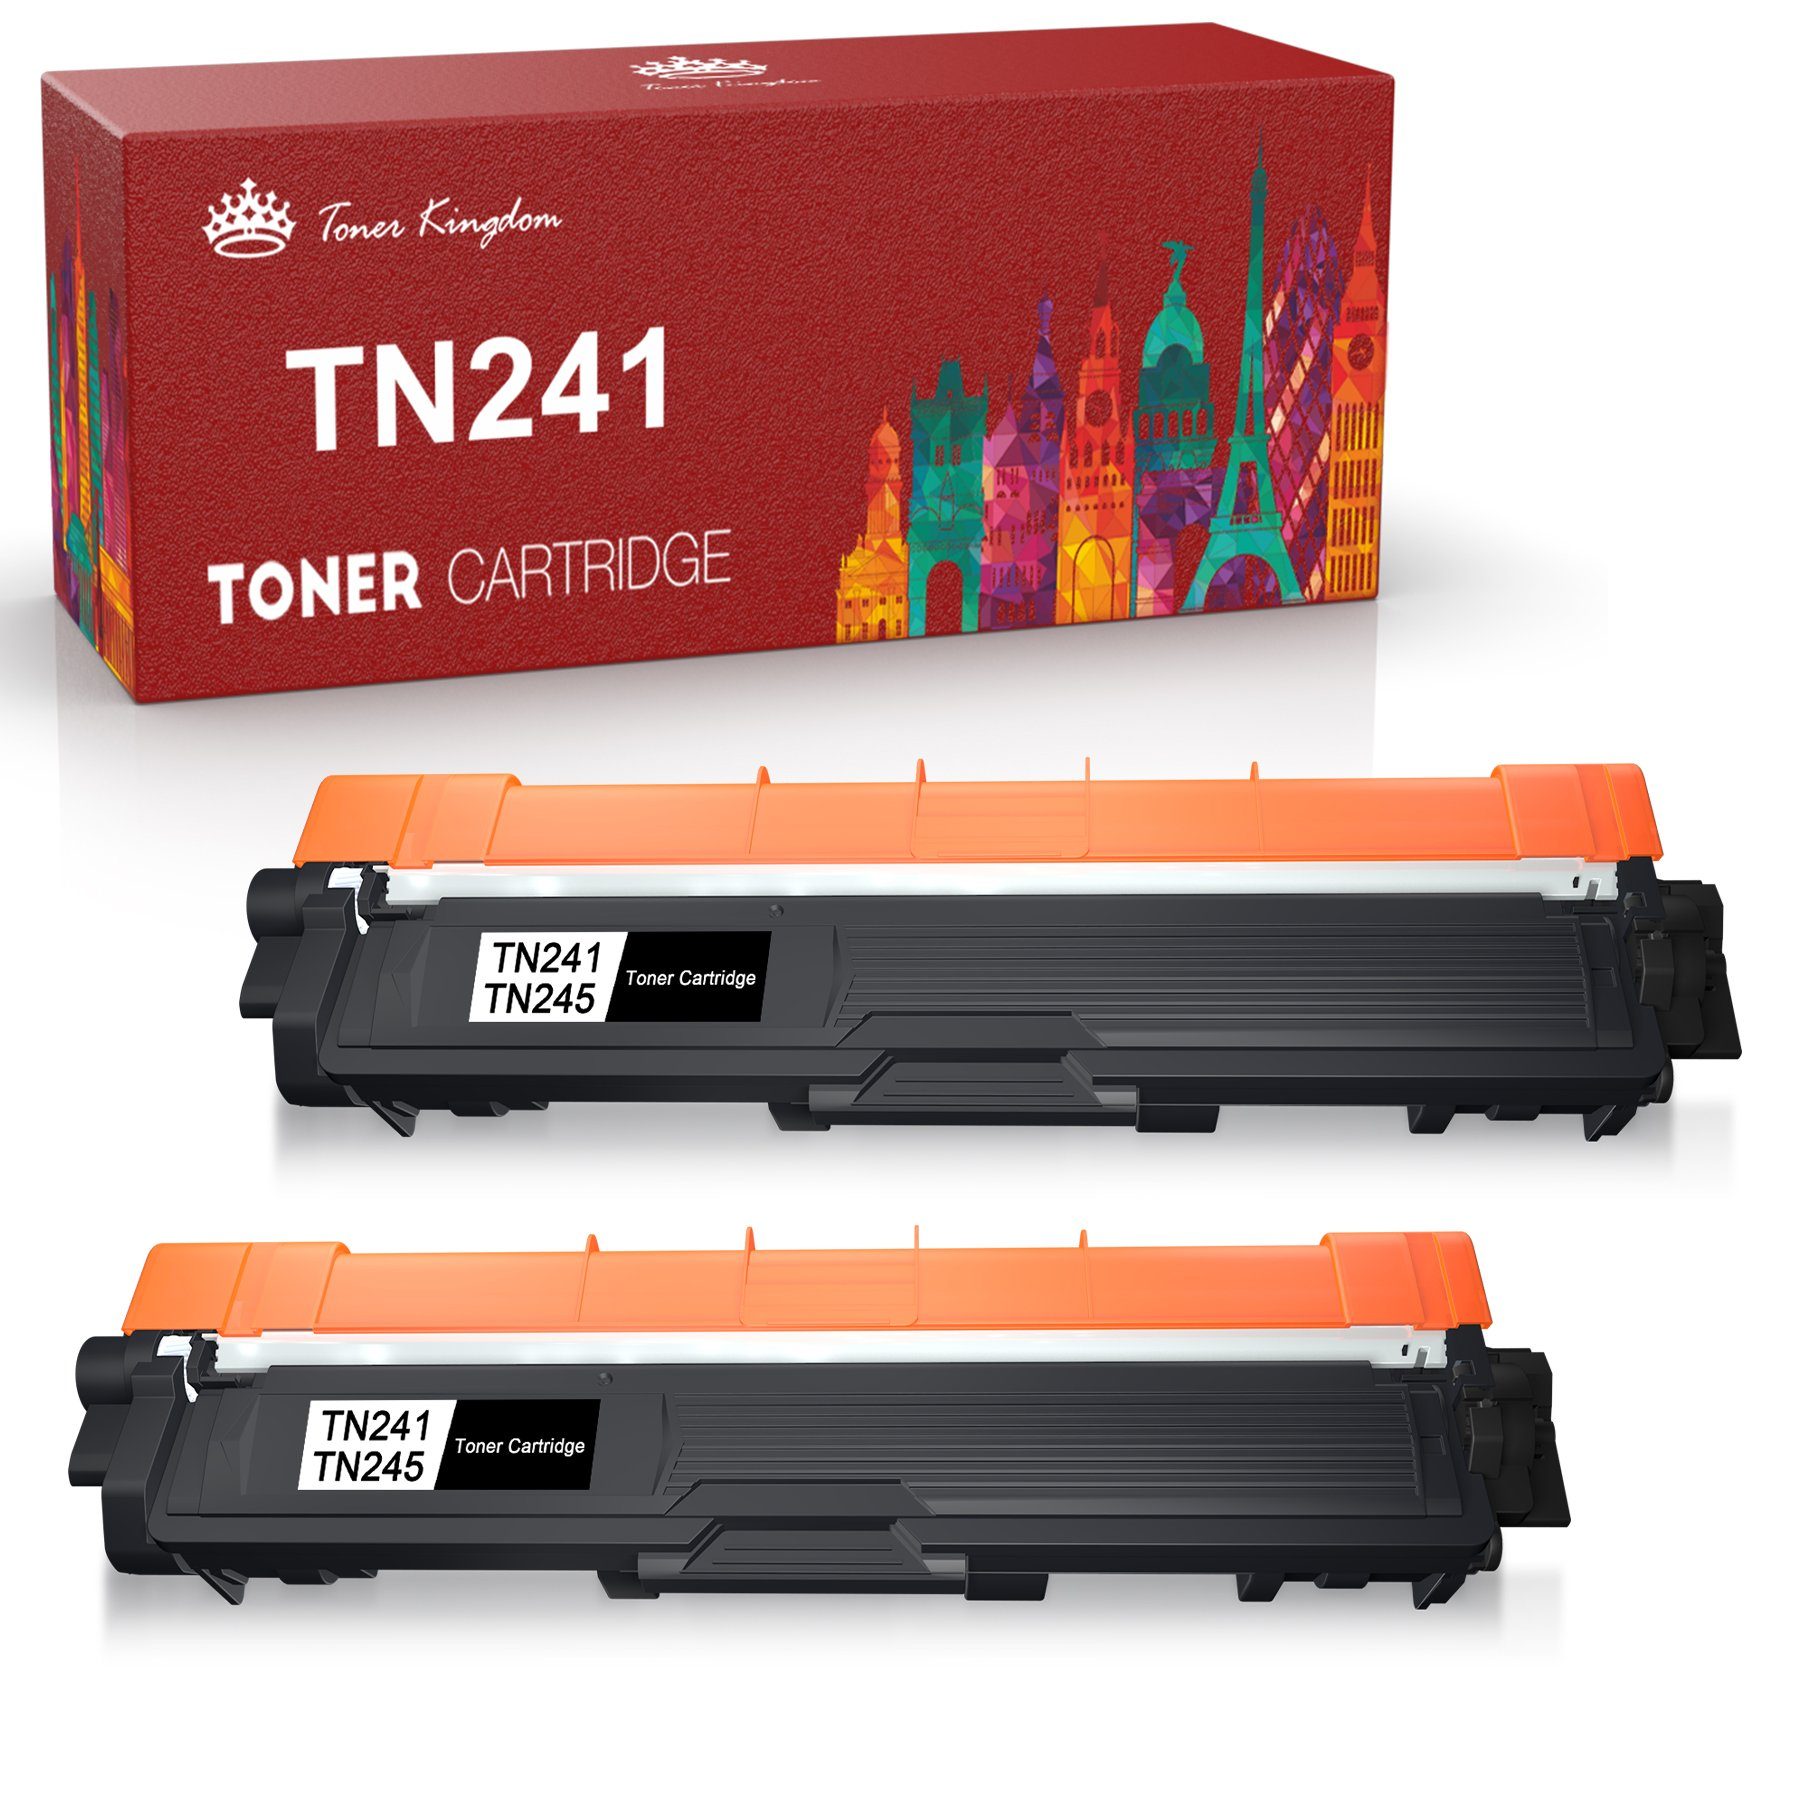 Toner Kingdom Tonerpatrone 2x Schwarz TN241 TN 241 für Brother HL-3150 HL-3170  MFC-9140CDN